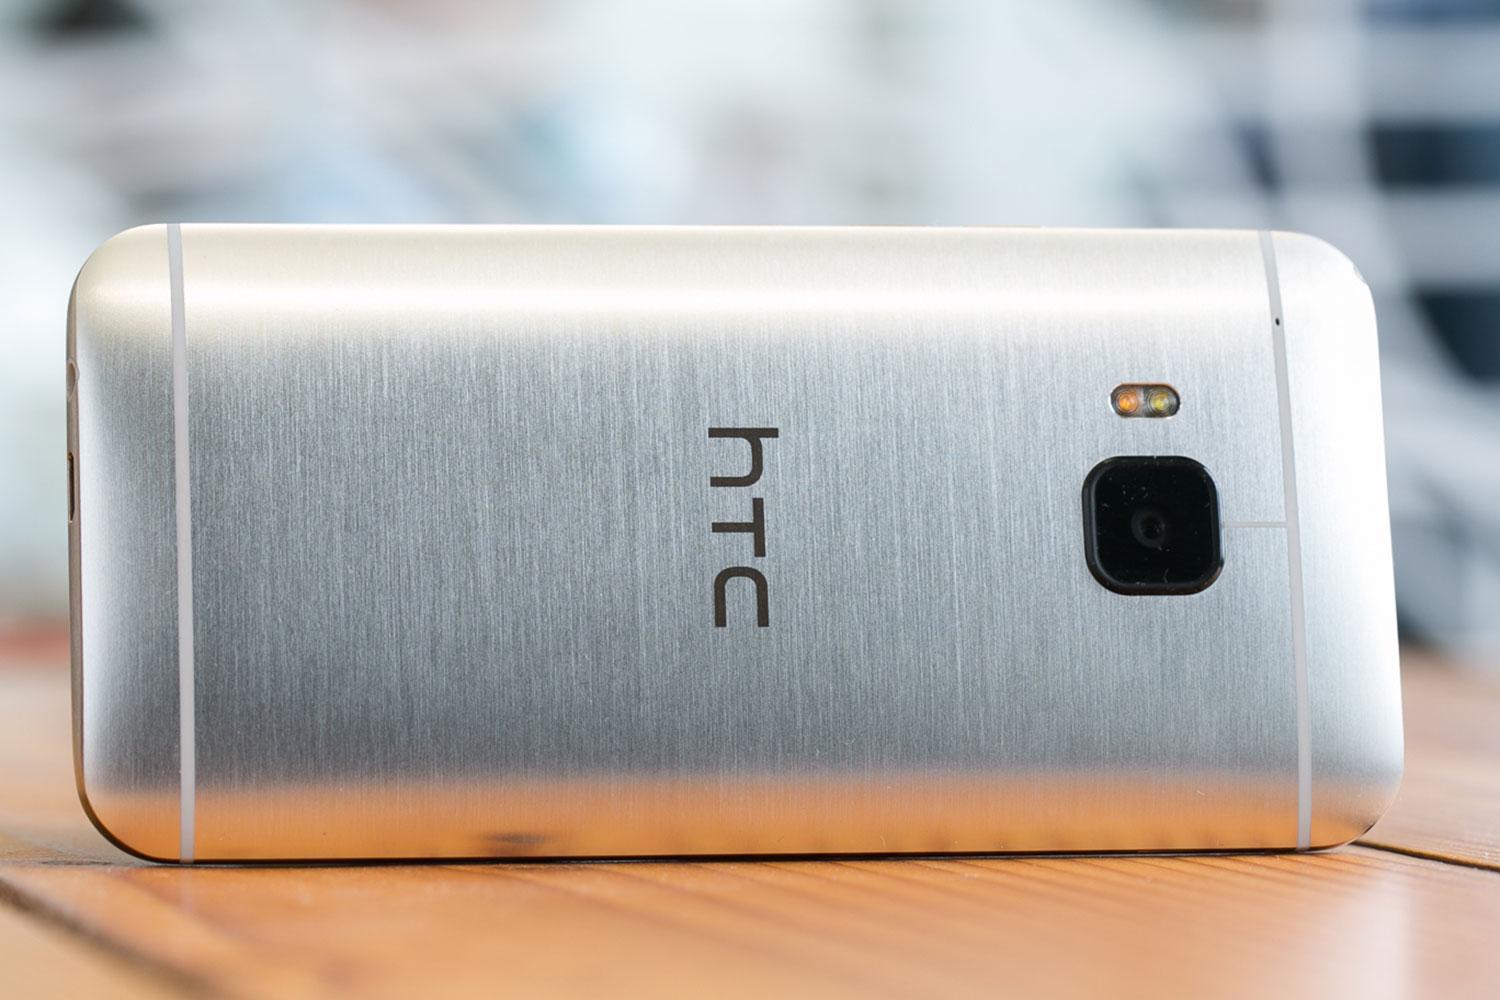 قاب پشتی HTC One M9